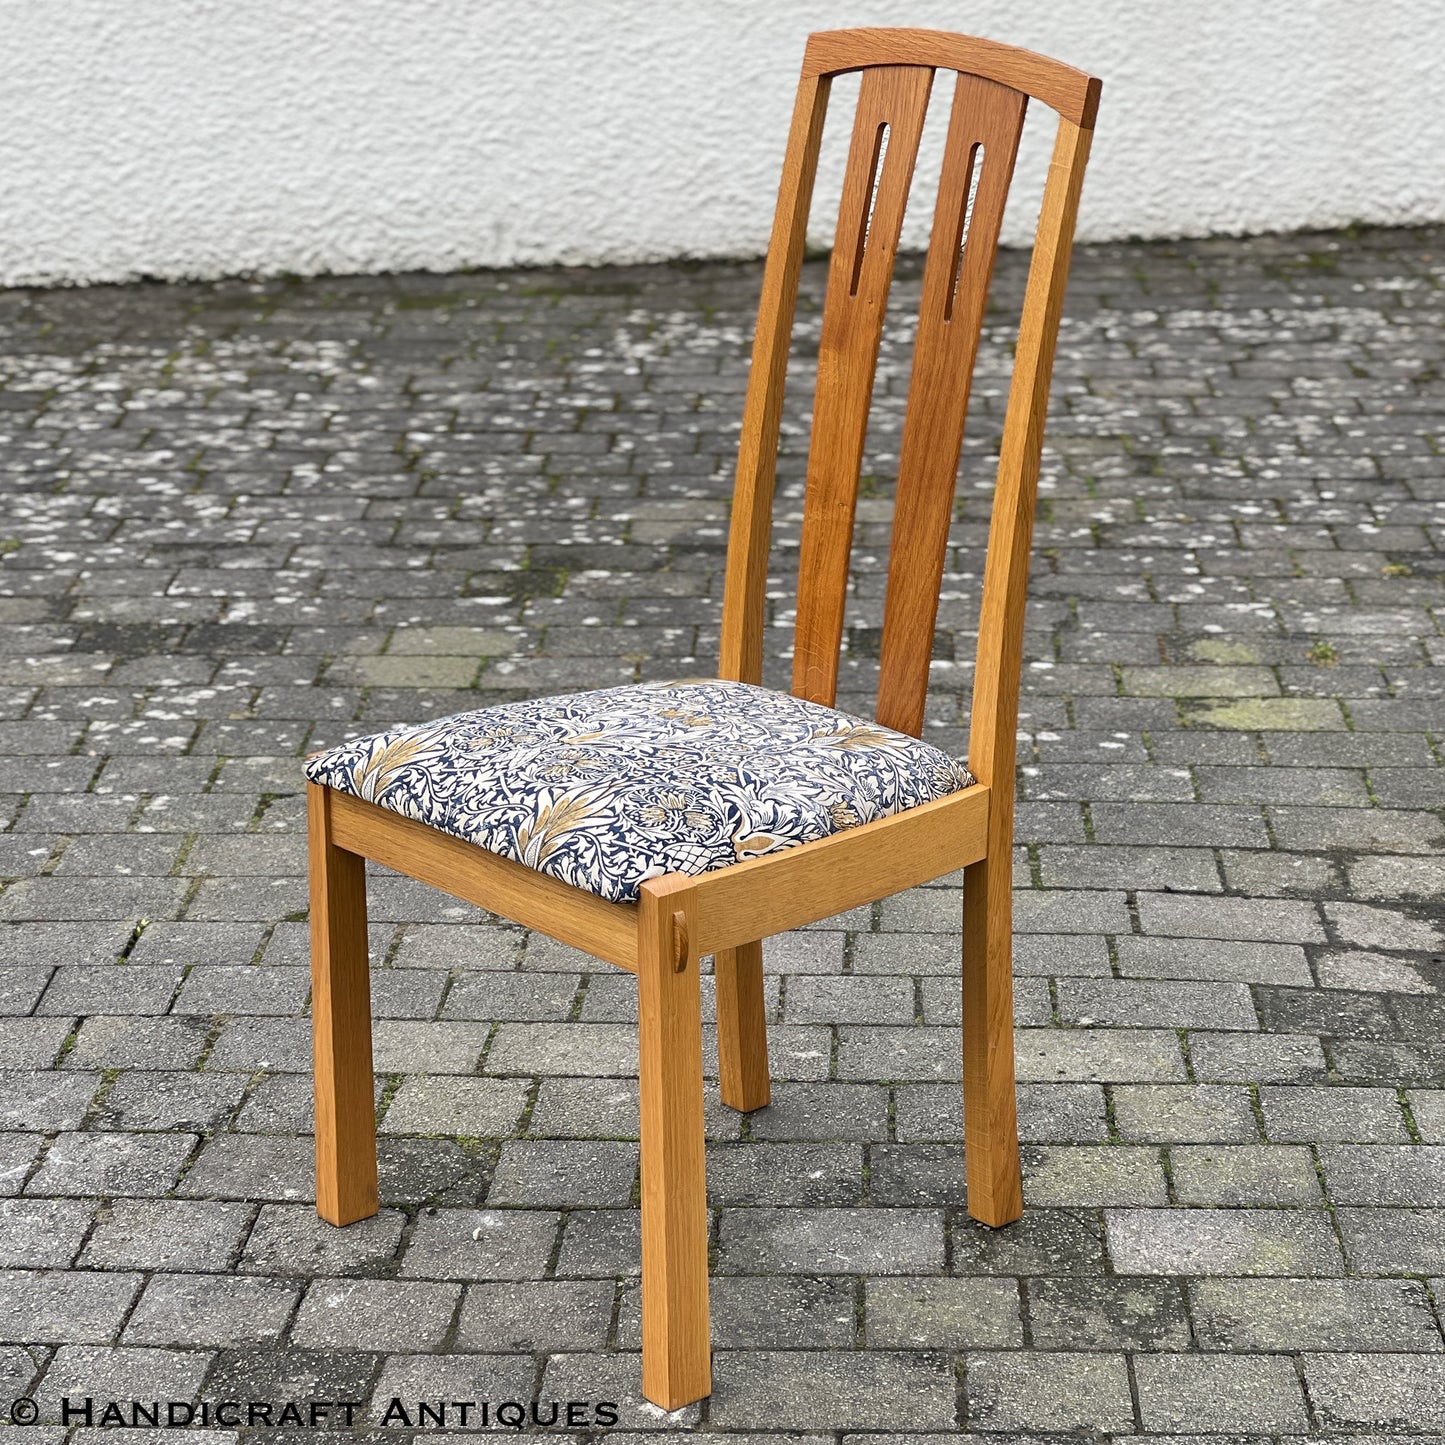 6 Robin Furlong Furniture Arts & Crafts Cotswold School English Oak Chairs